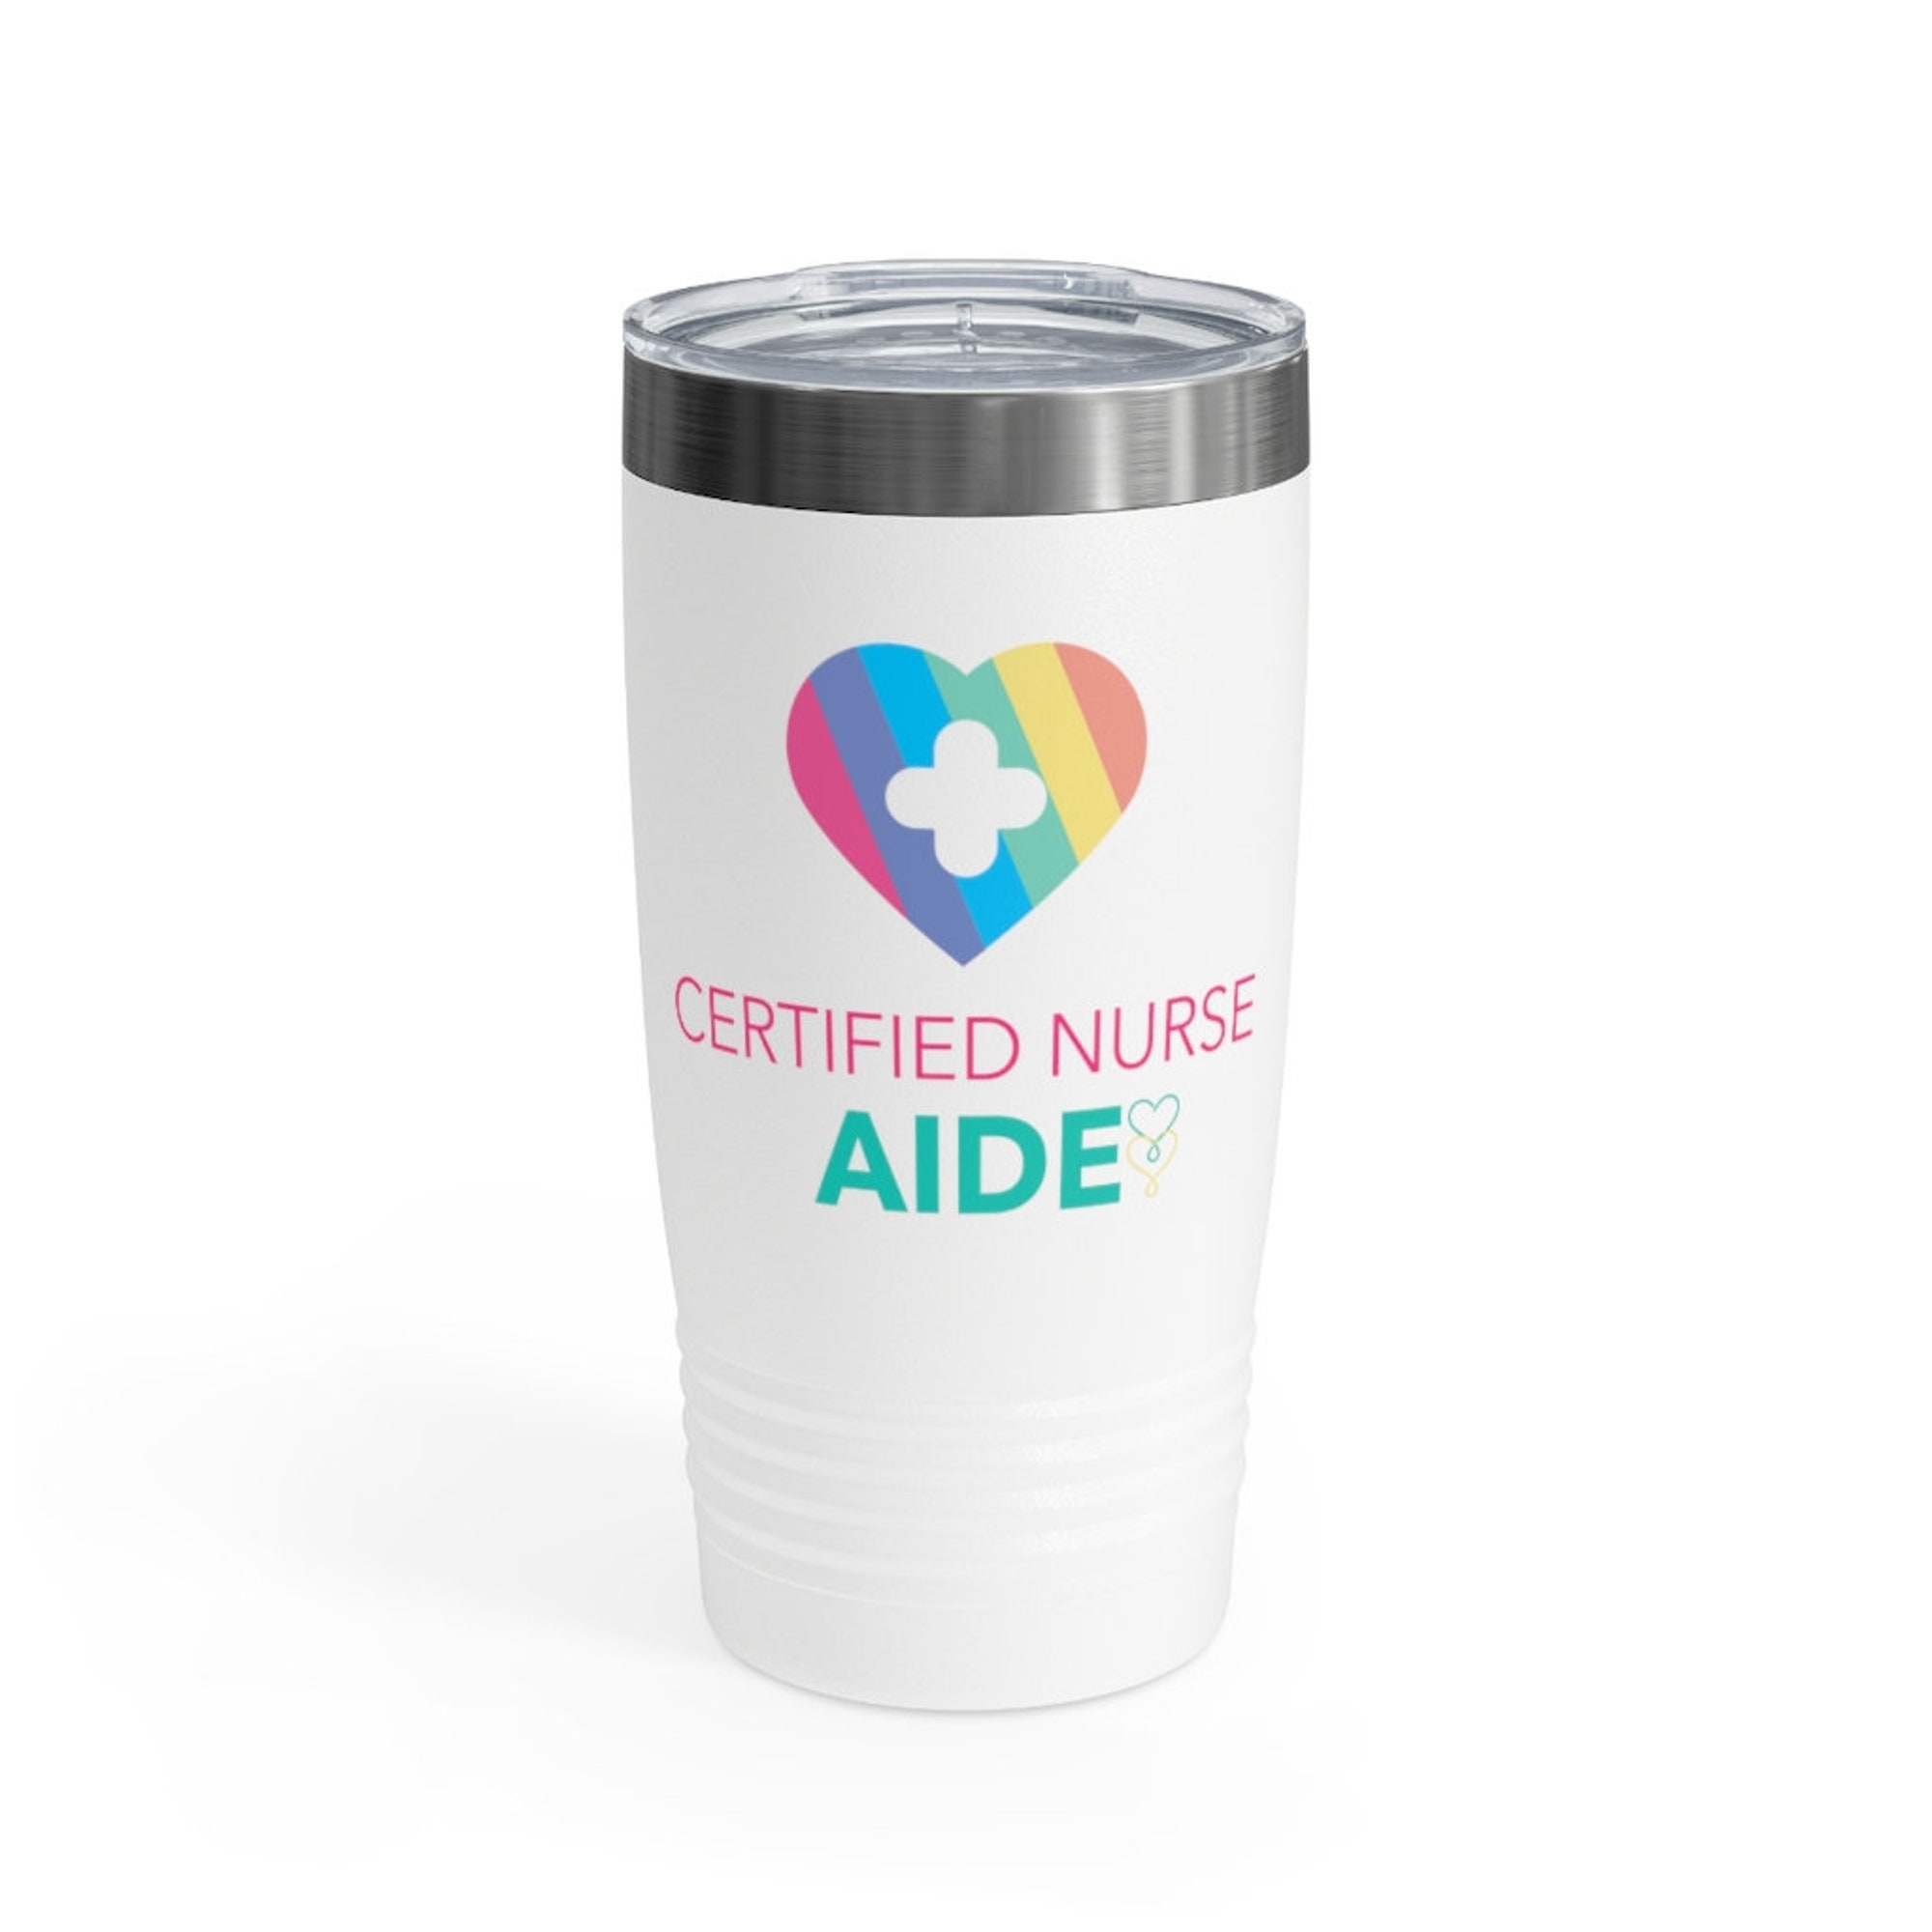 Discover Certified Nurse Aide Ringneck Tumbler